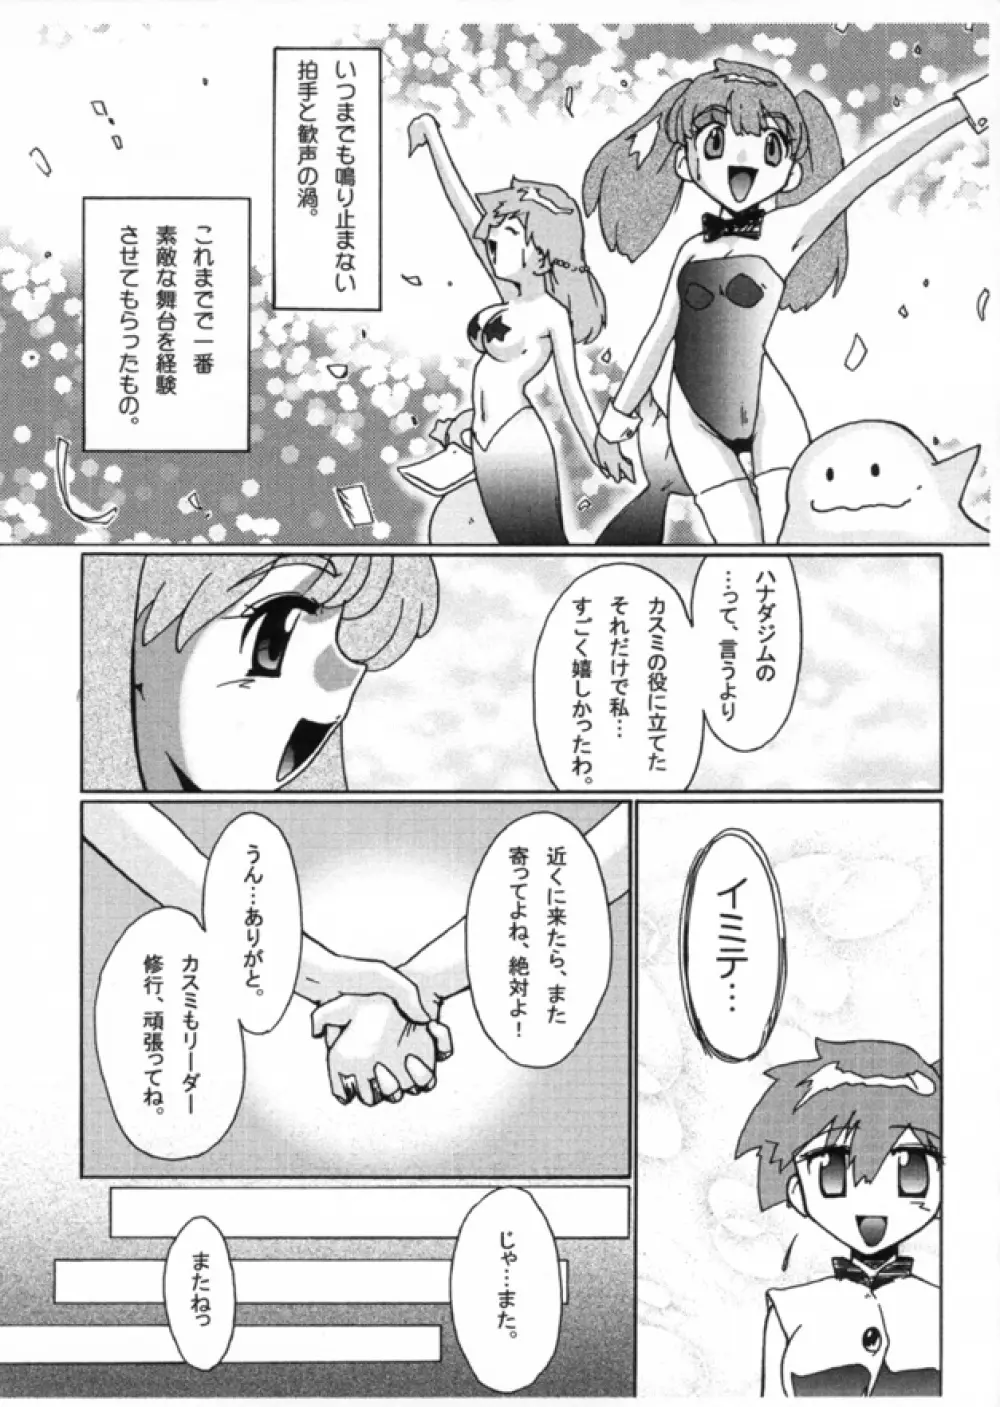 KASUMIX XPLOSION Kasumi Comic part5 - page40